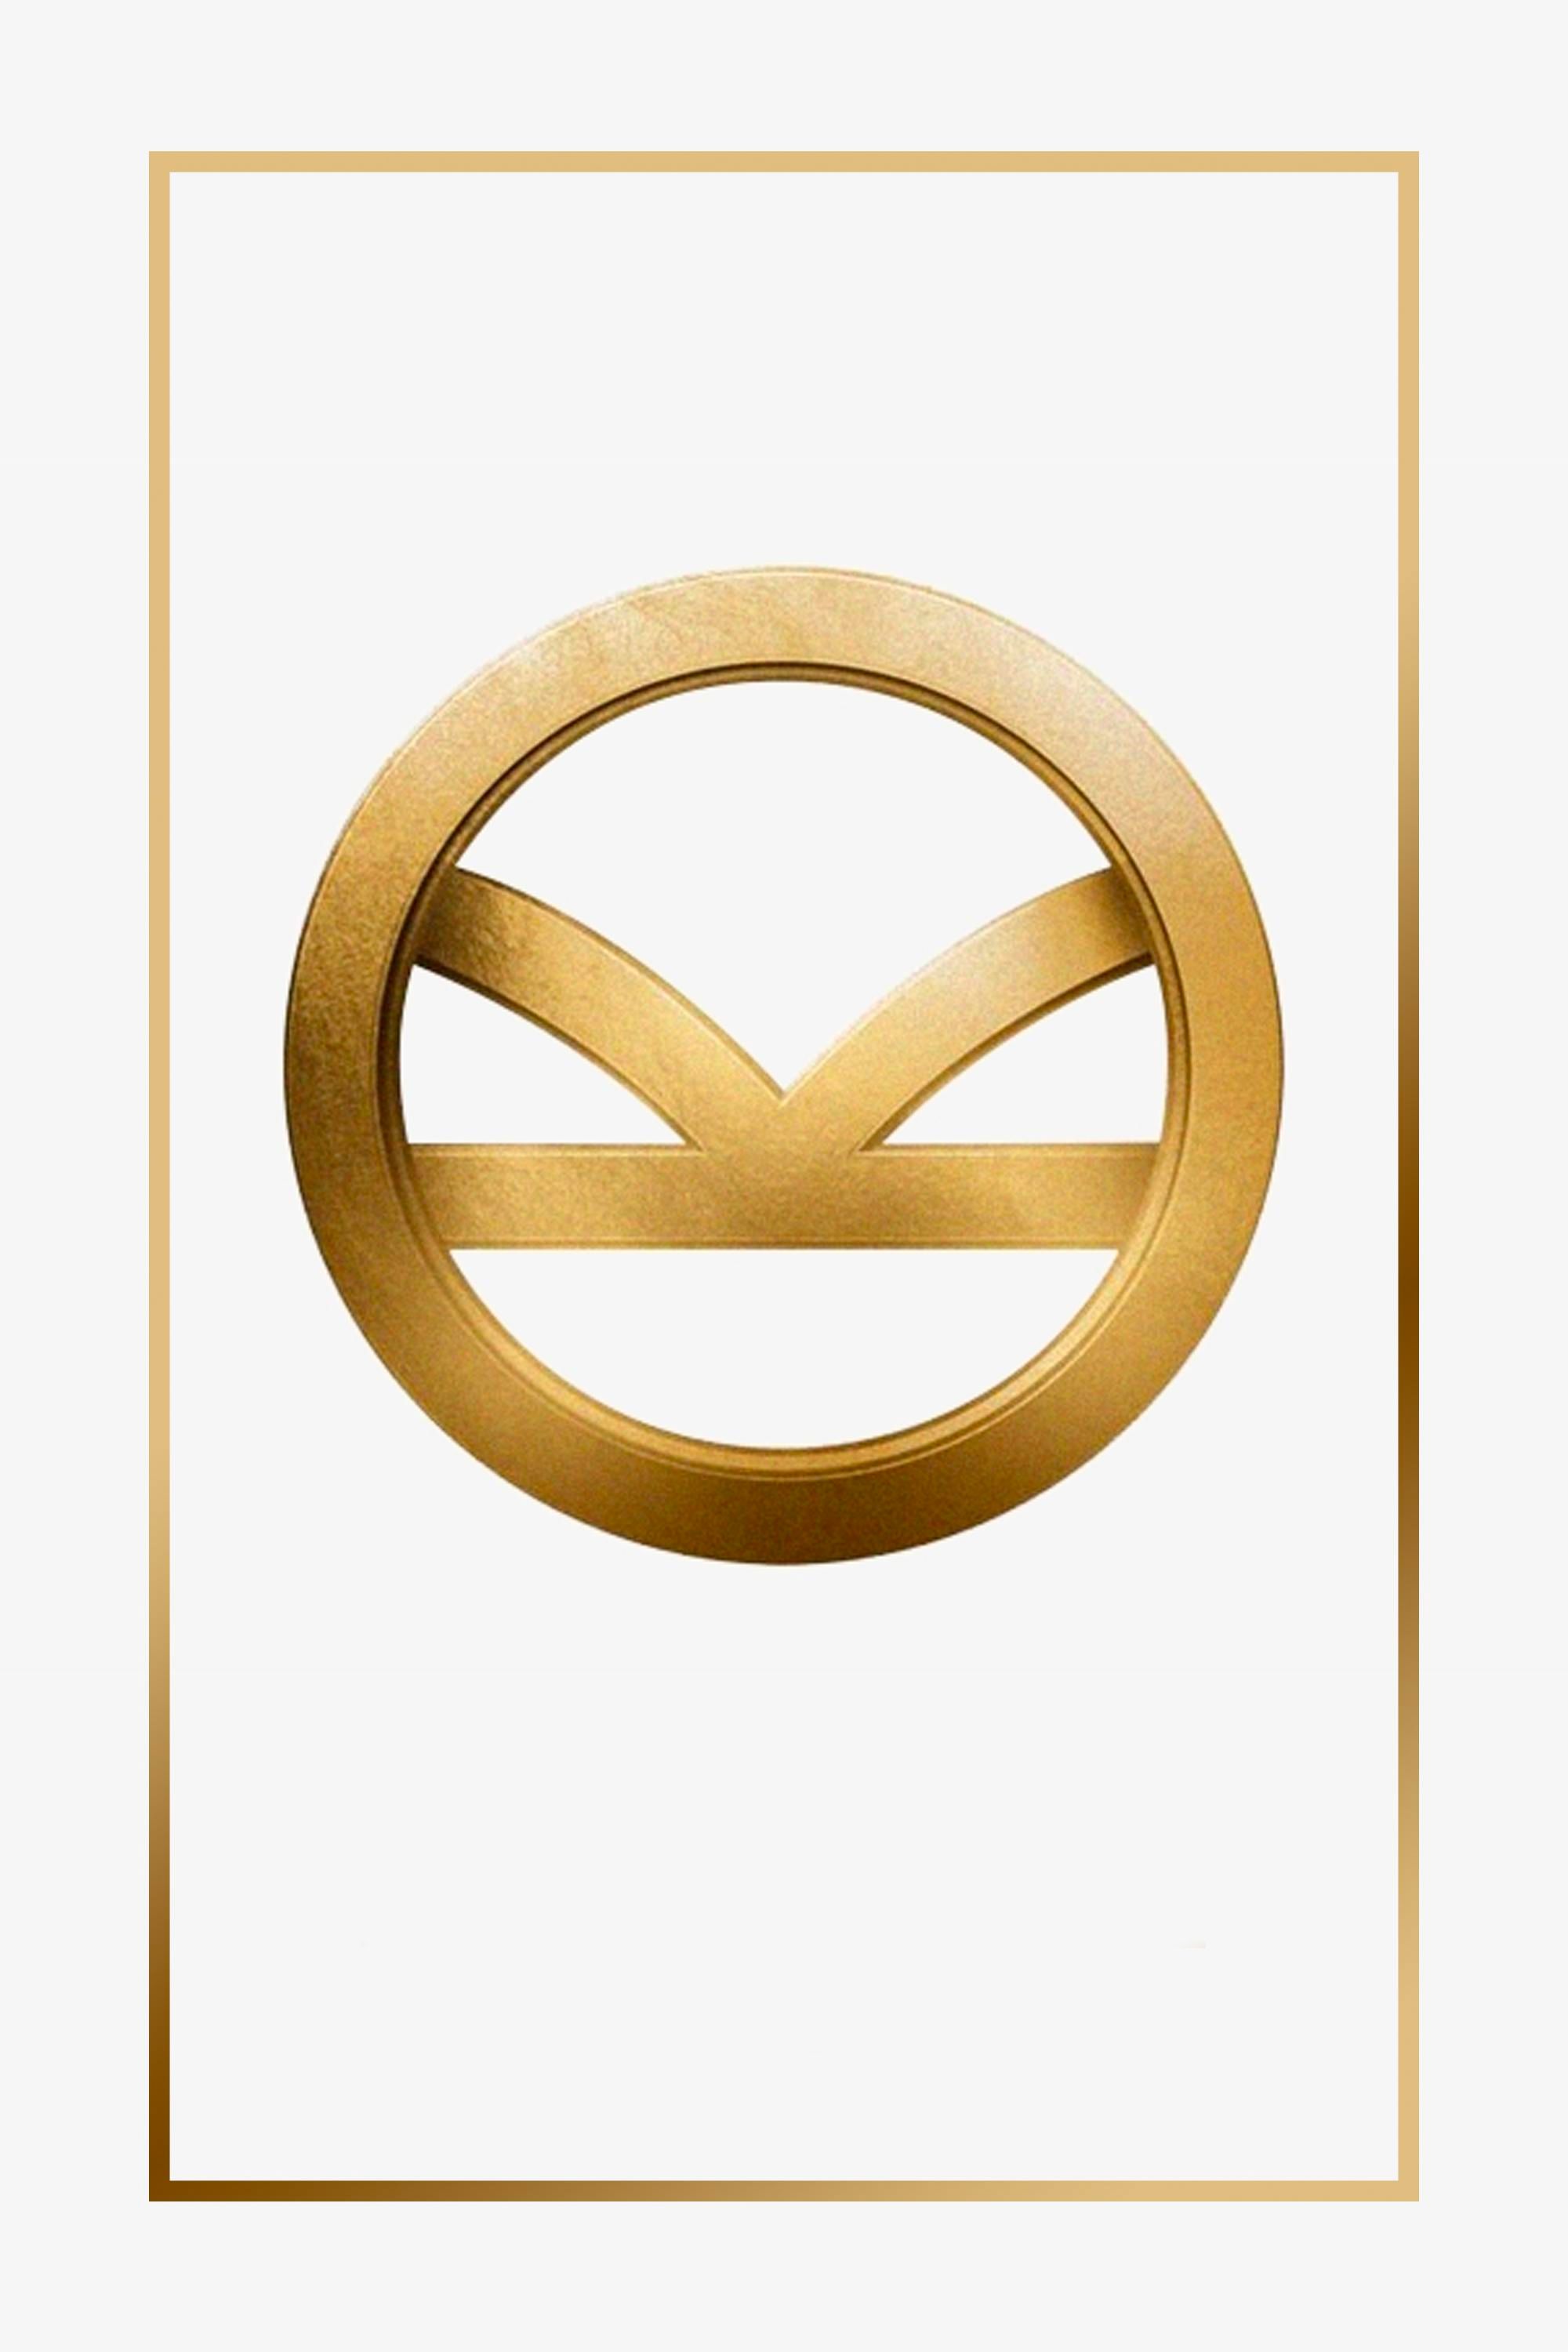 Kingsman logo | Kingsman, Kingsman the secret service, Secret service